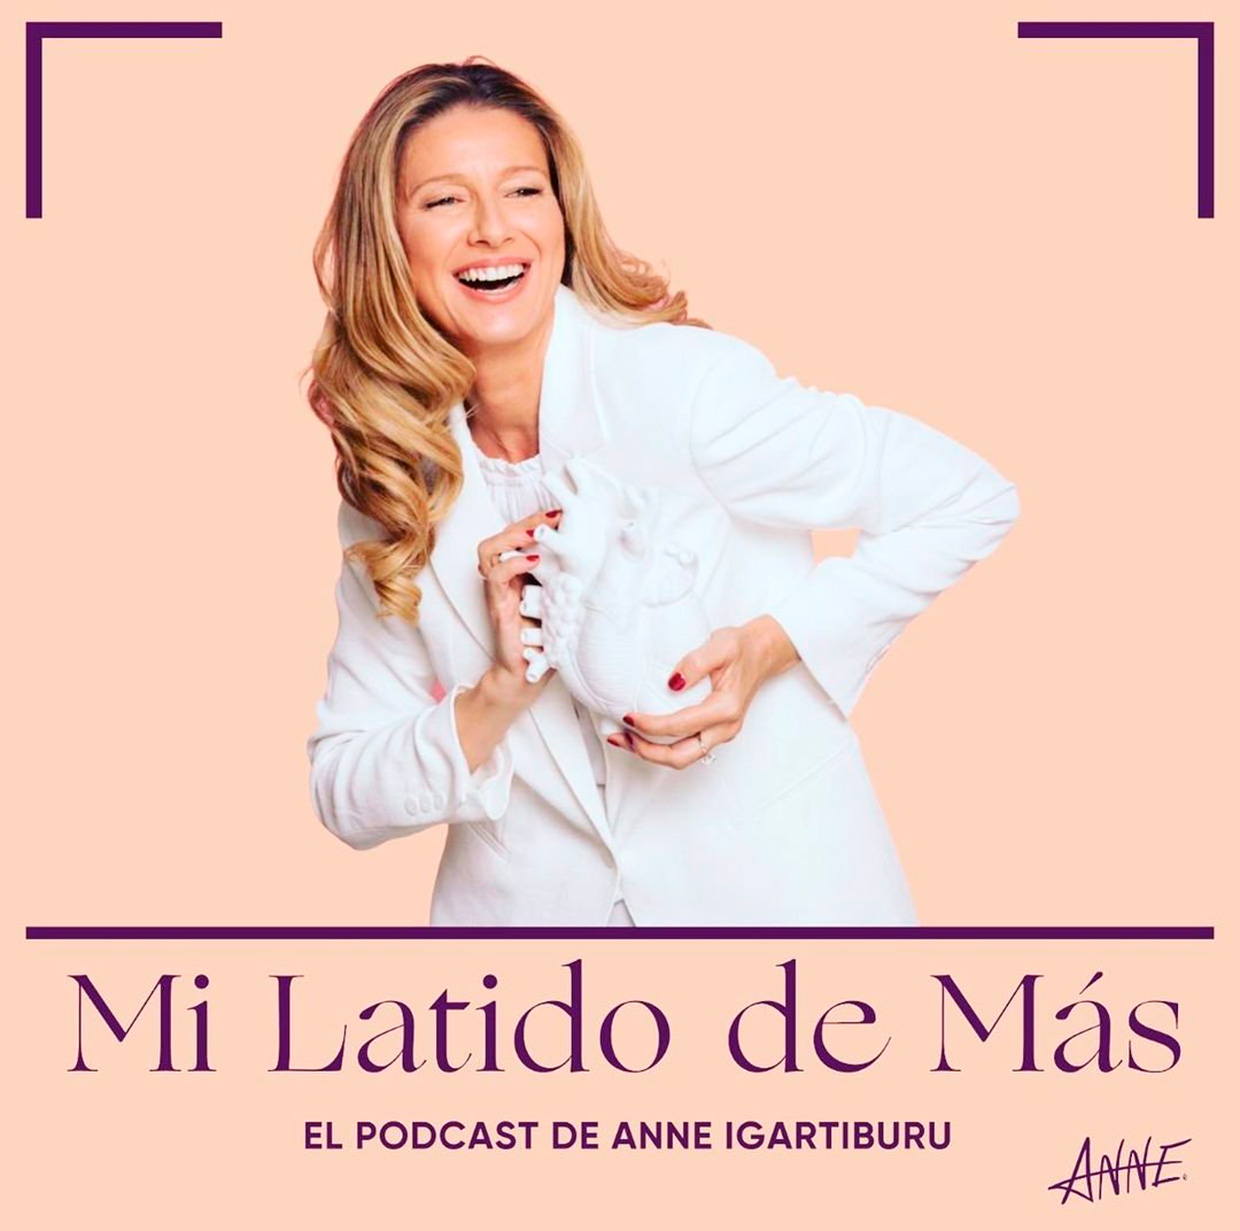 Anne en su nuevo "podcast"